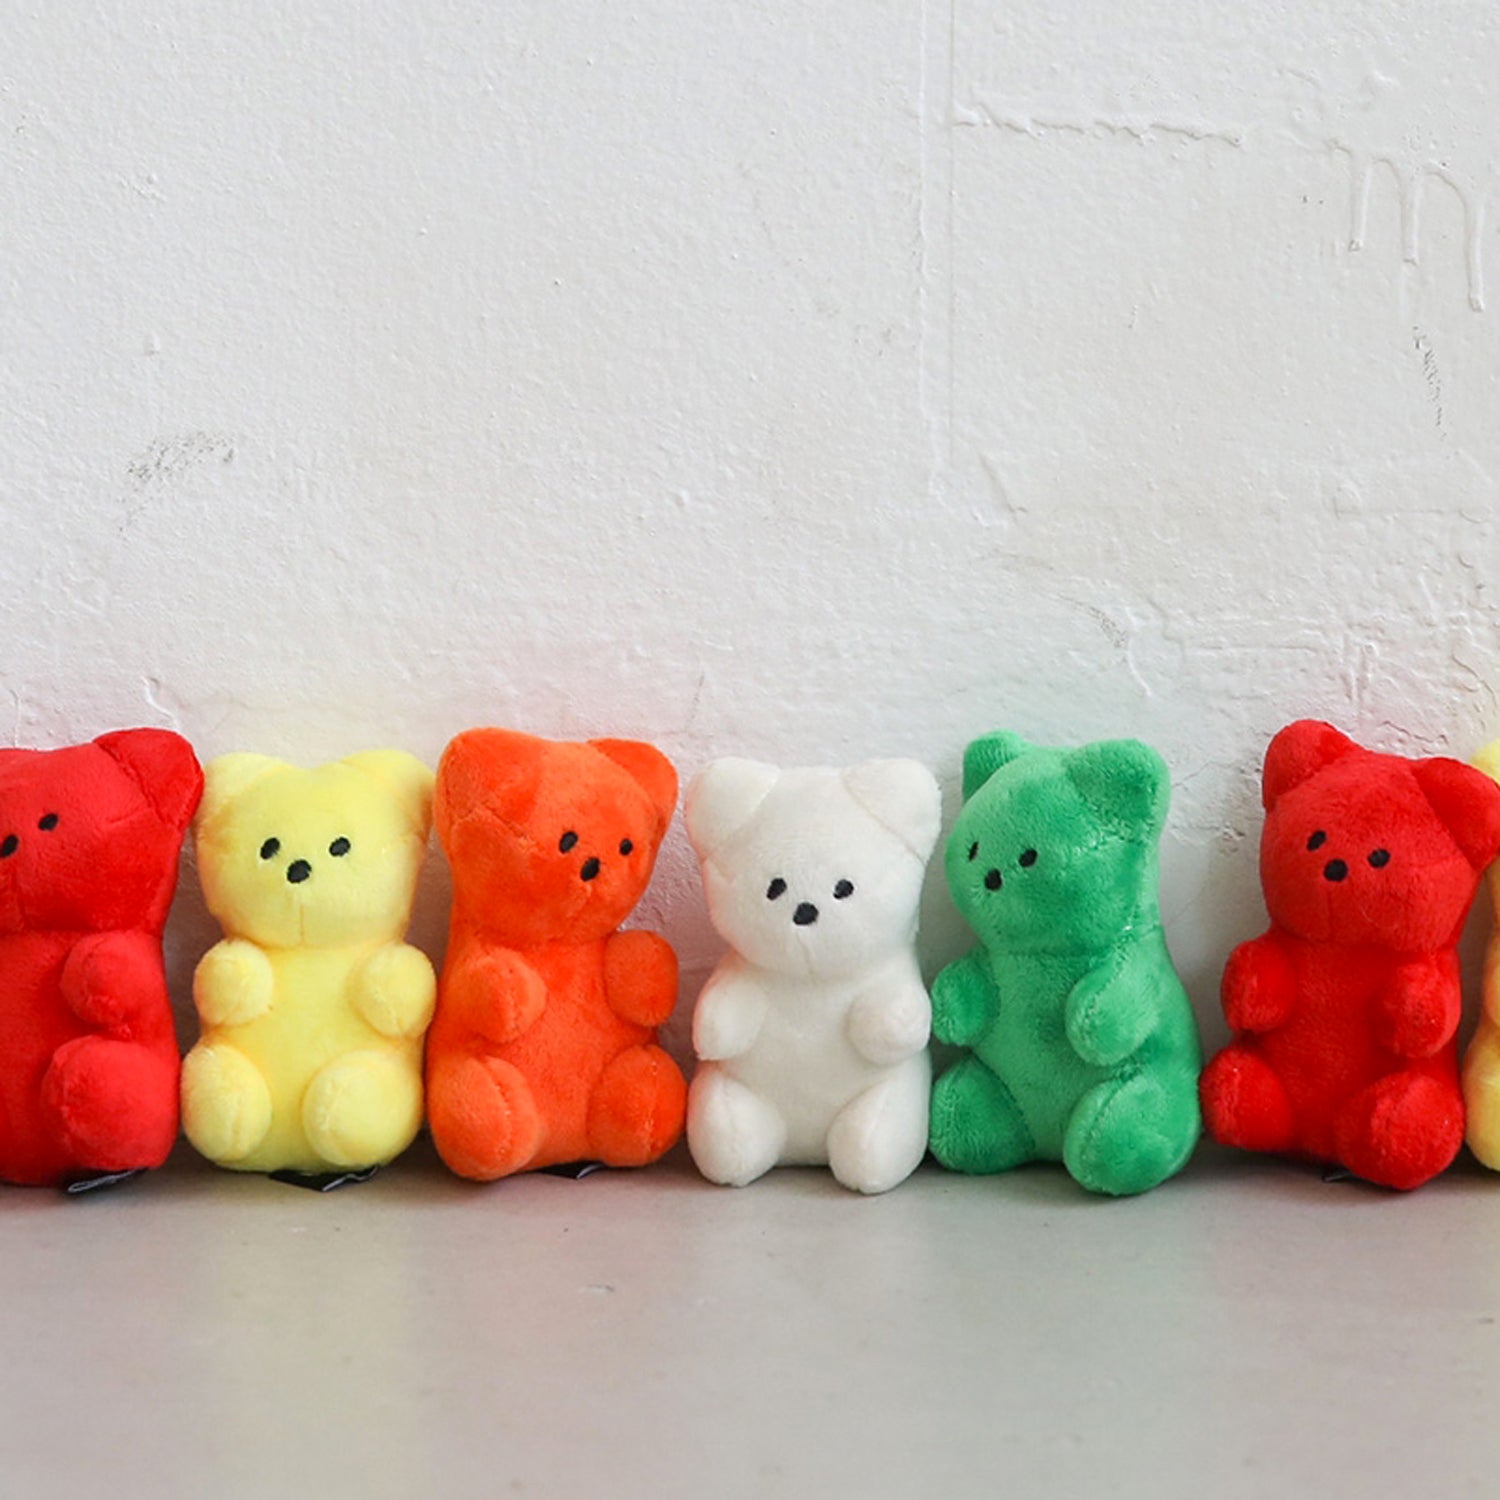 gummy bear stuffed animal